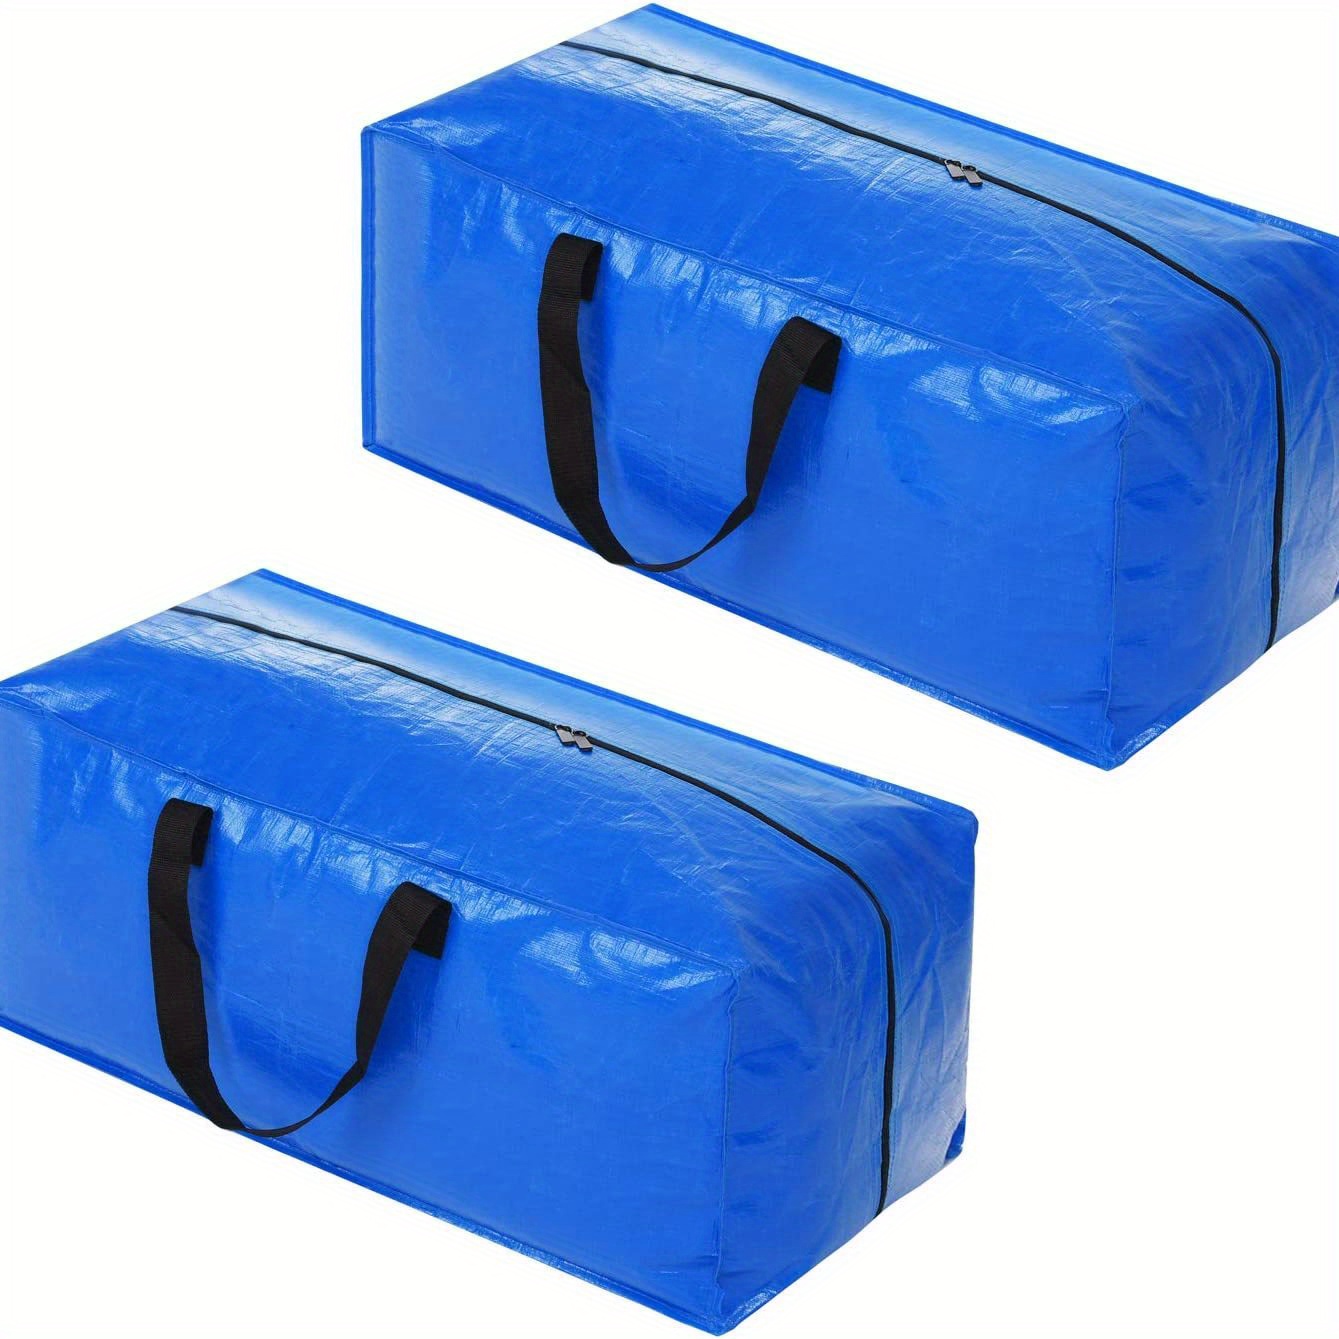 IKEA Frakta Storage Bag - Blue (5)